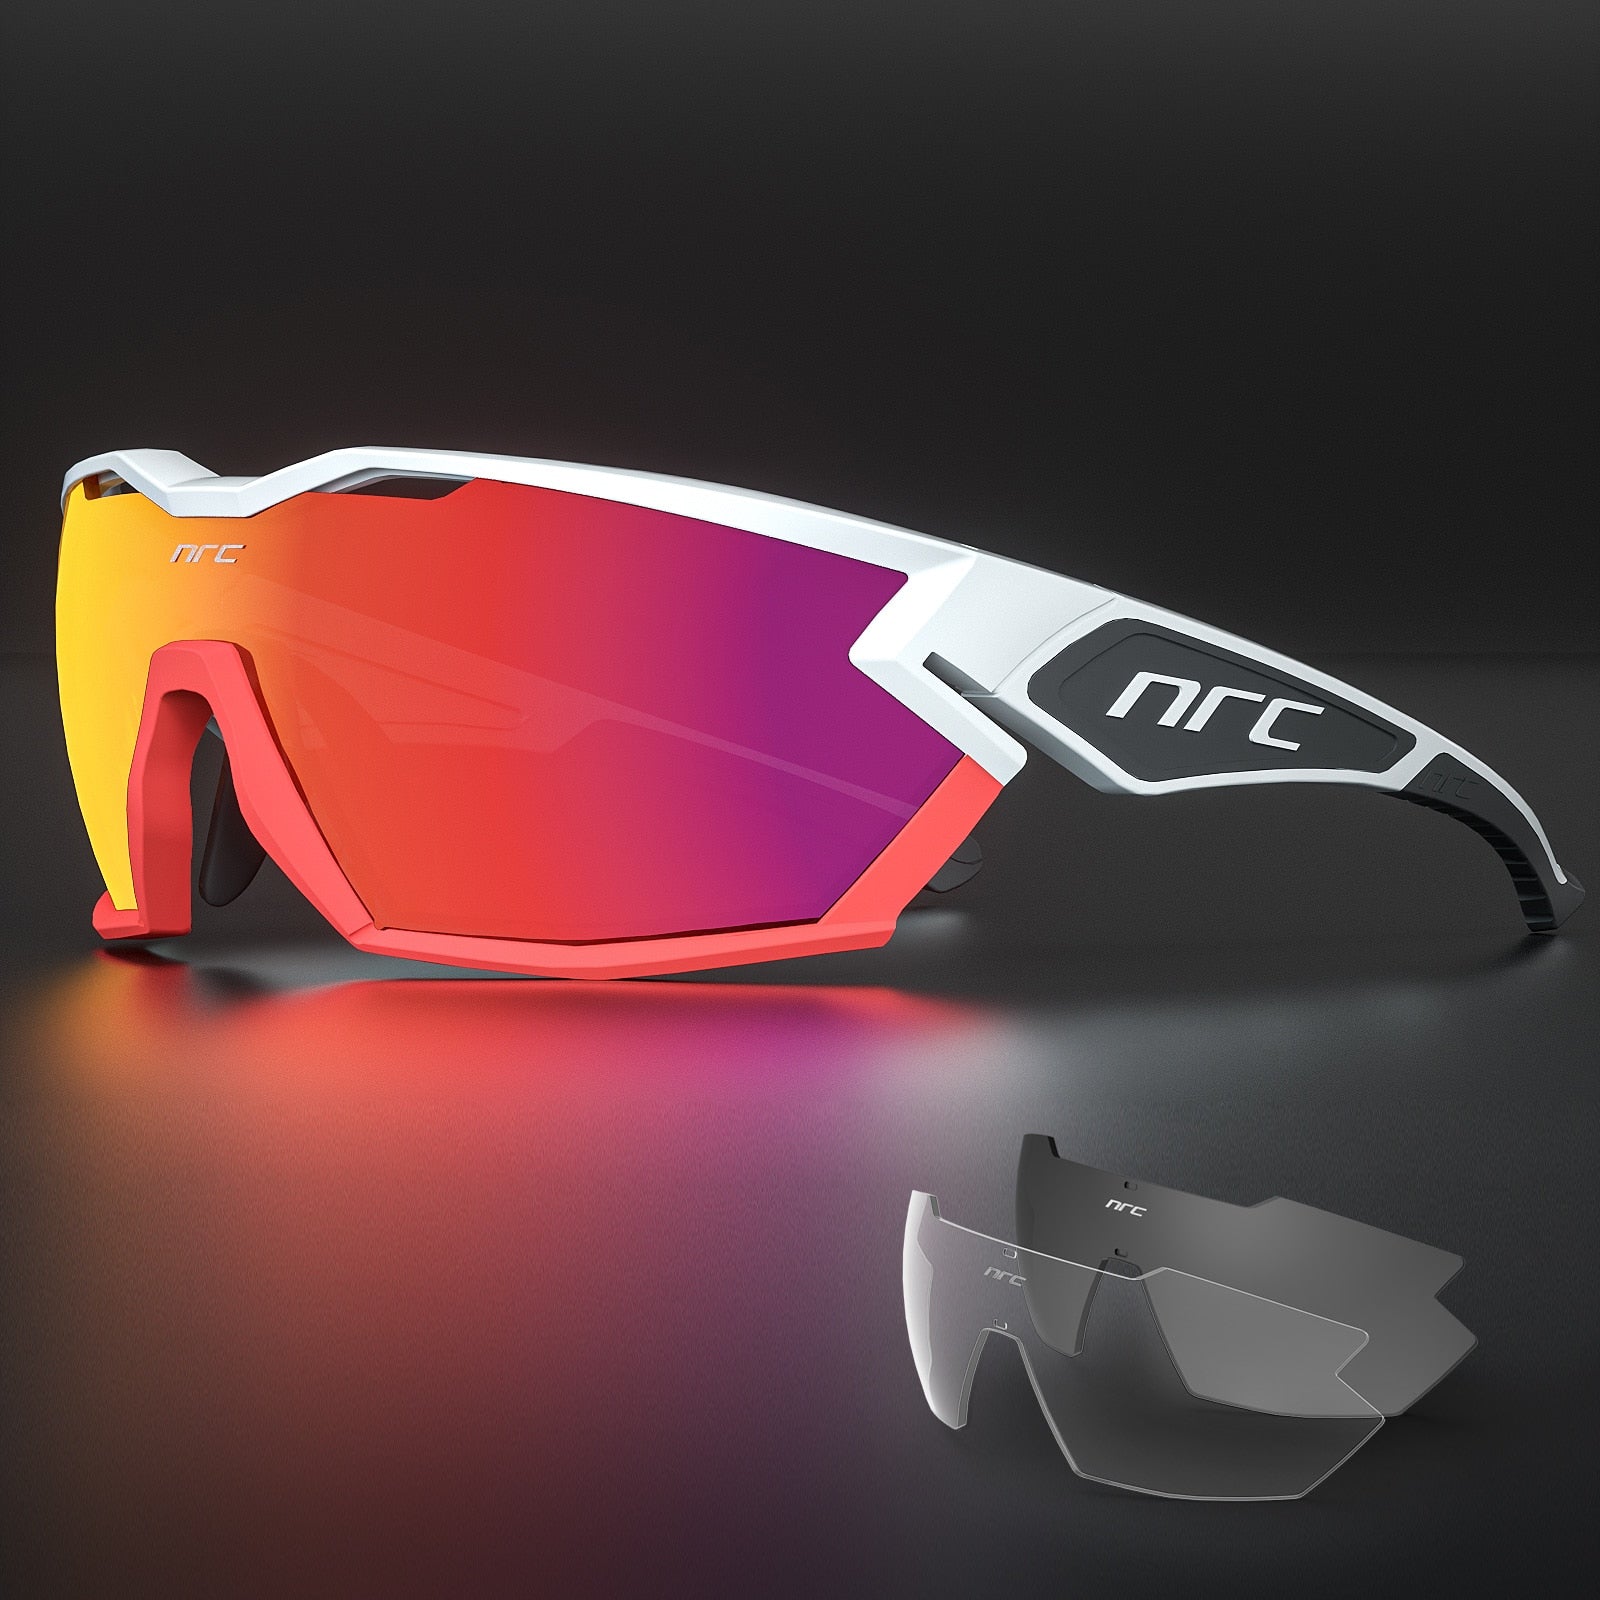 Full-frame white heat NRC Pro Cycling glasses